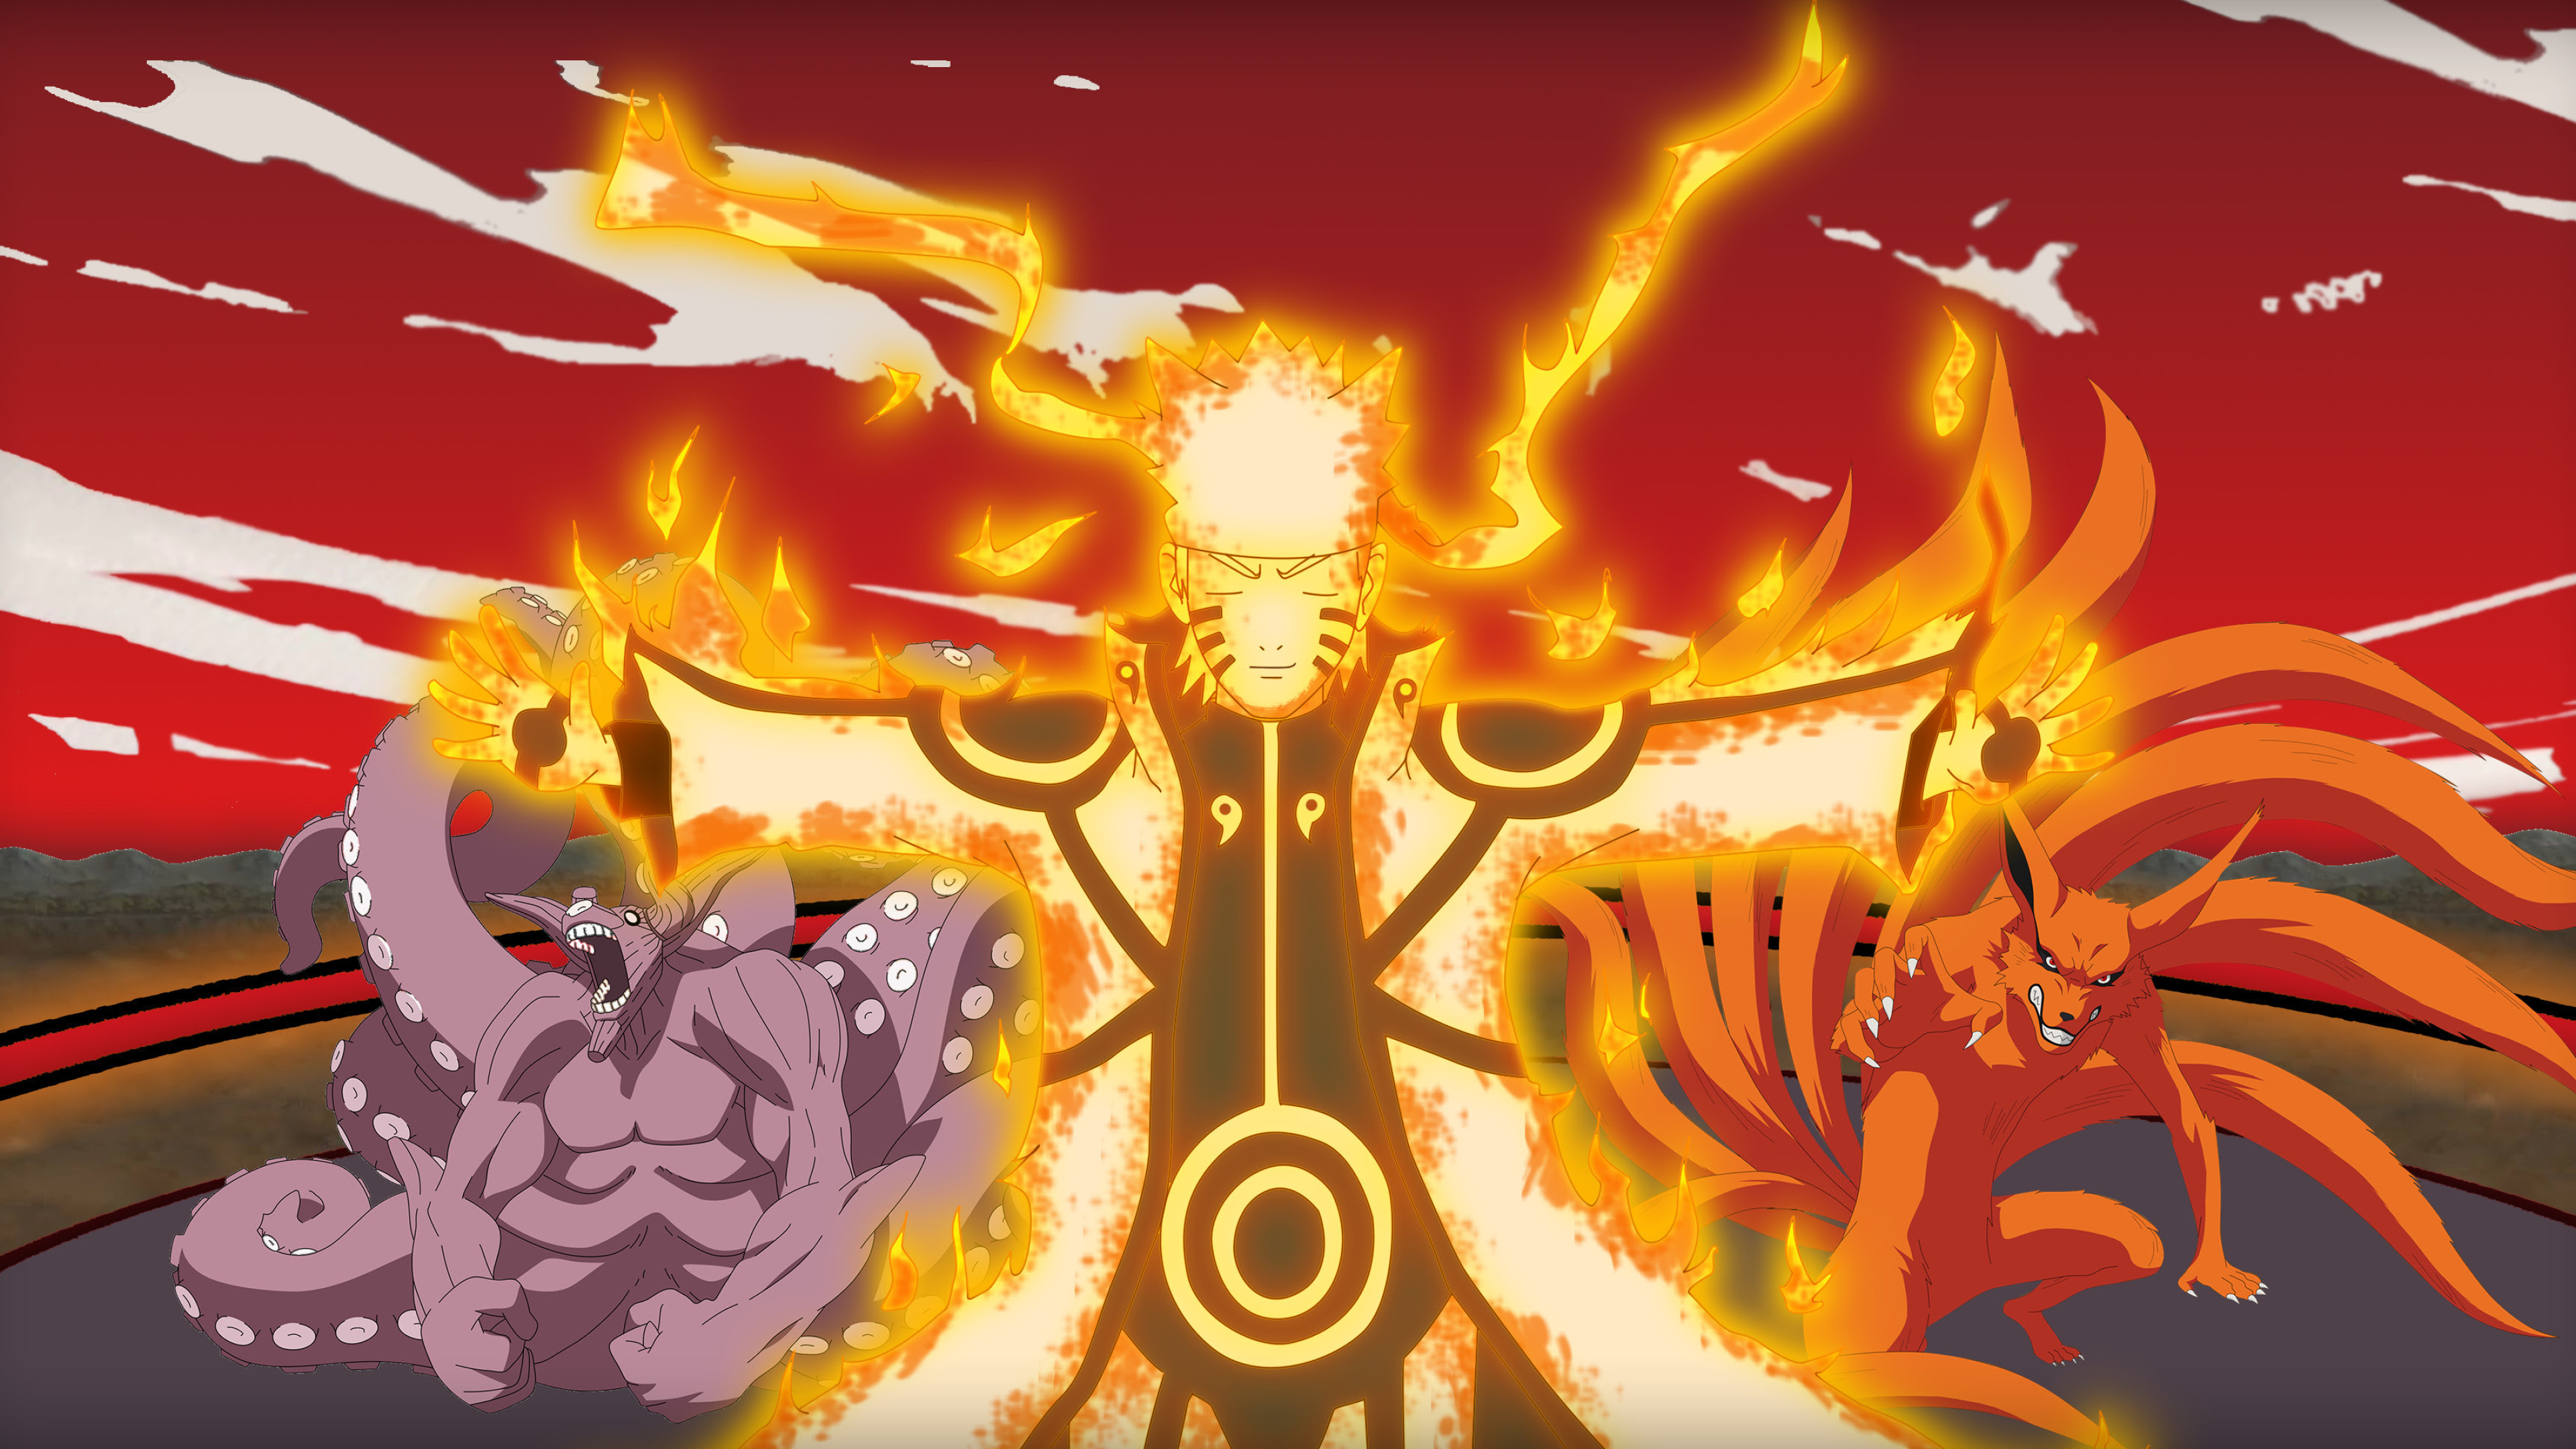 Kurama (Anime), Naruto's powerful form, HD wallpapers, Epic battle scenes, 3840x2160 4K Desktop